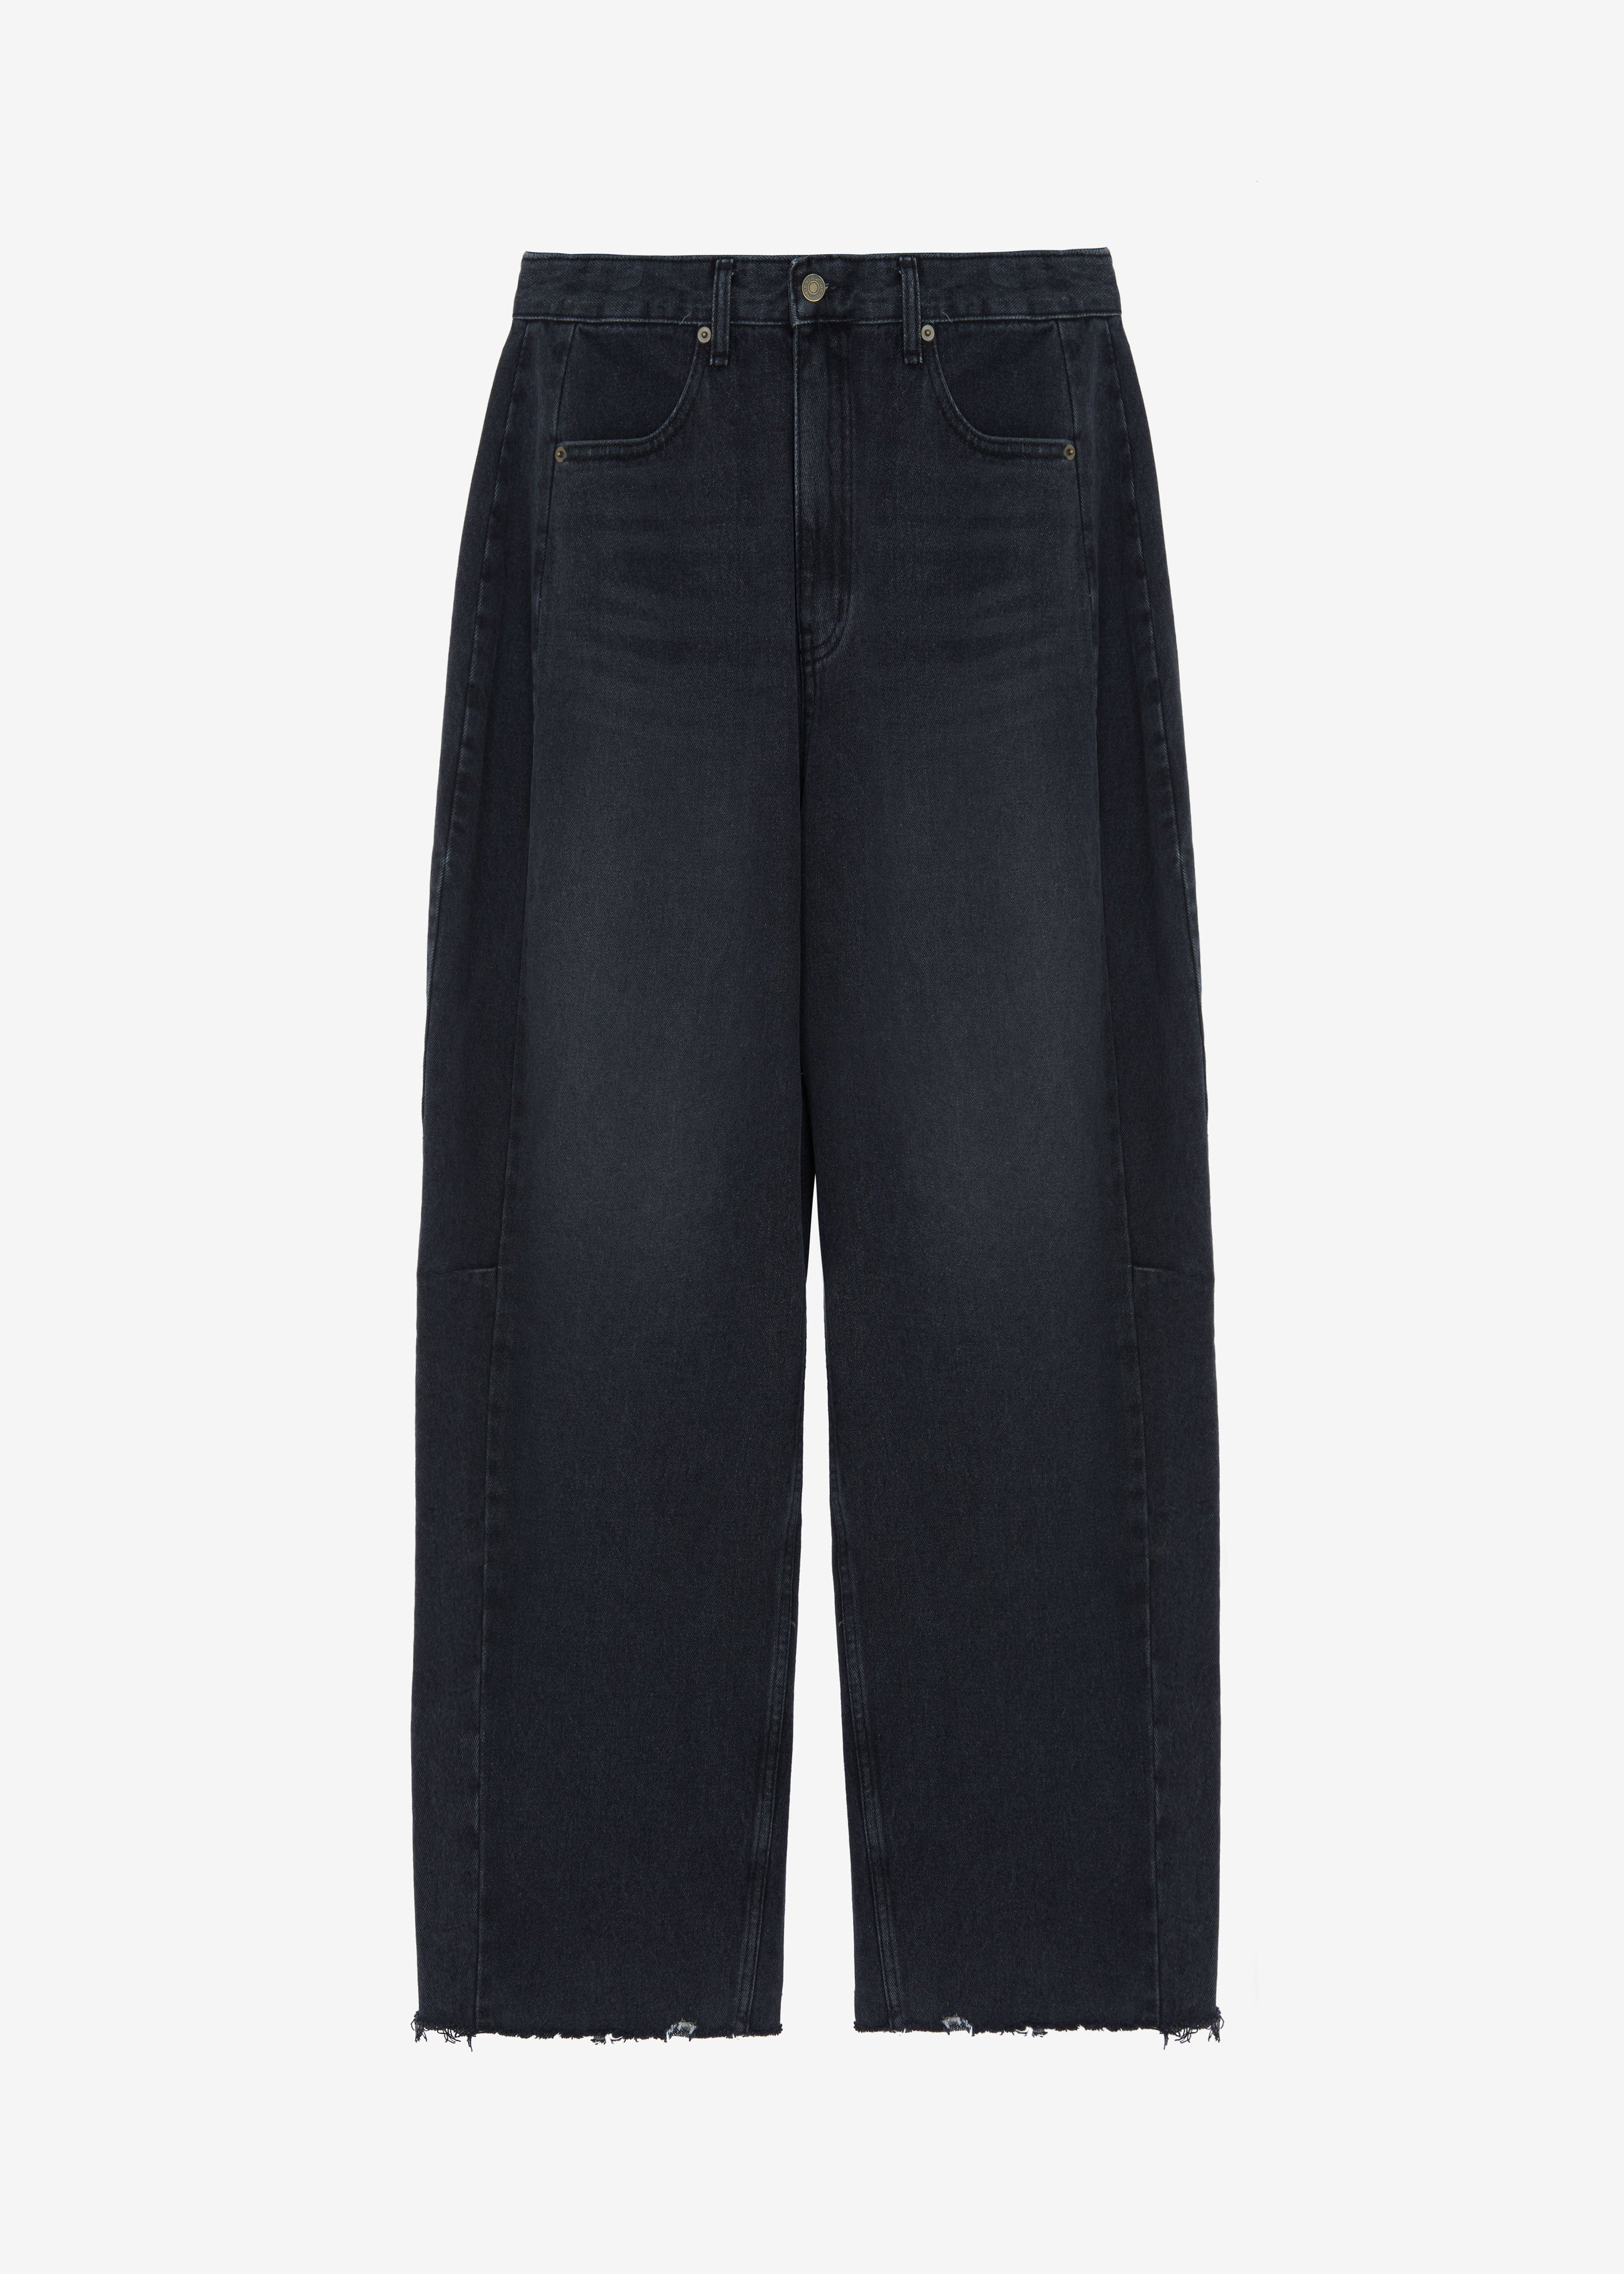 Gatlin Jeans - Black Wash - 9